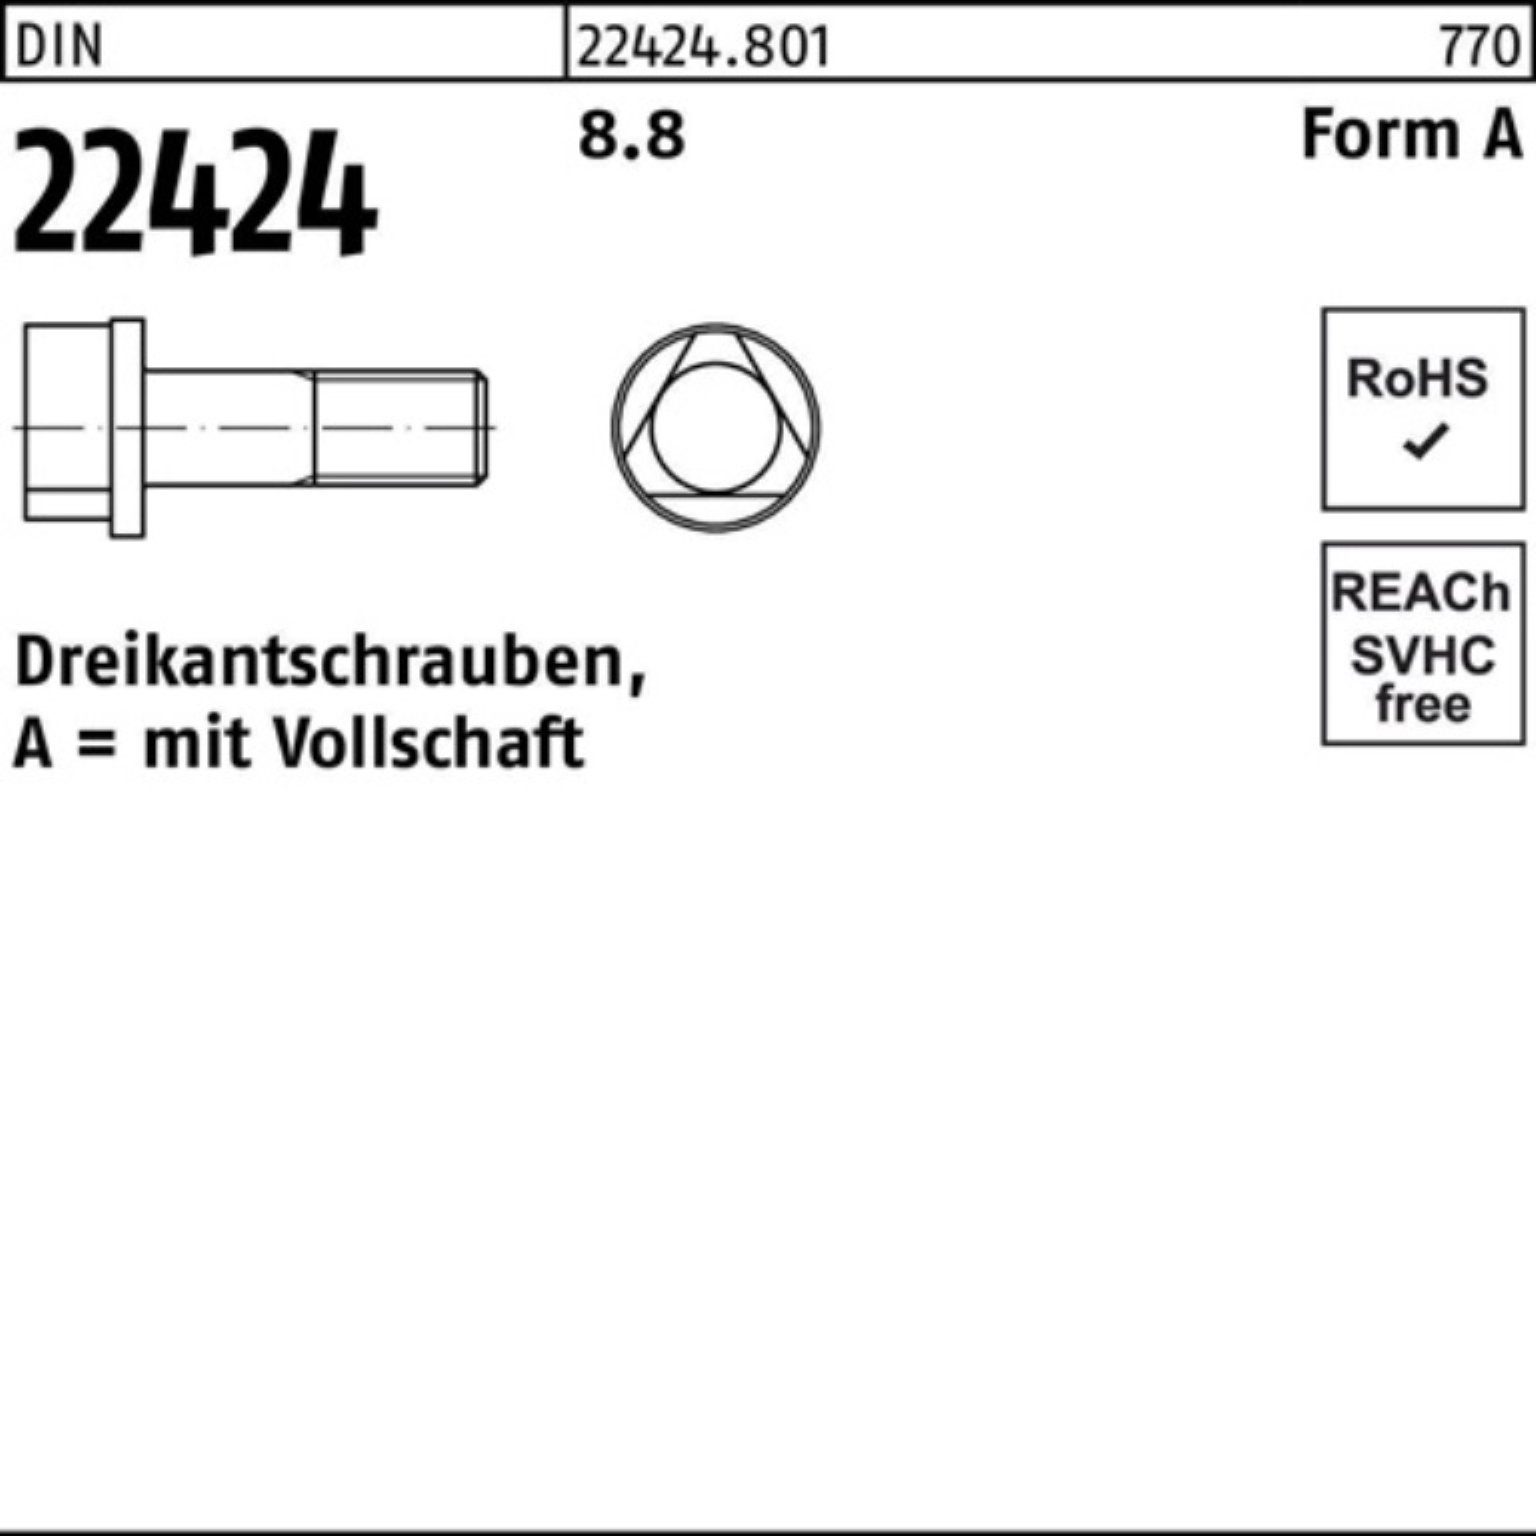 Reyher Schraube 100er Pack Dreikantschraube DIN 22424 FormA AM 8x 25 8.8 100 Stück DI